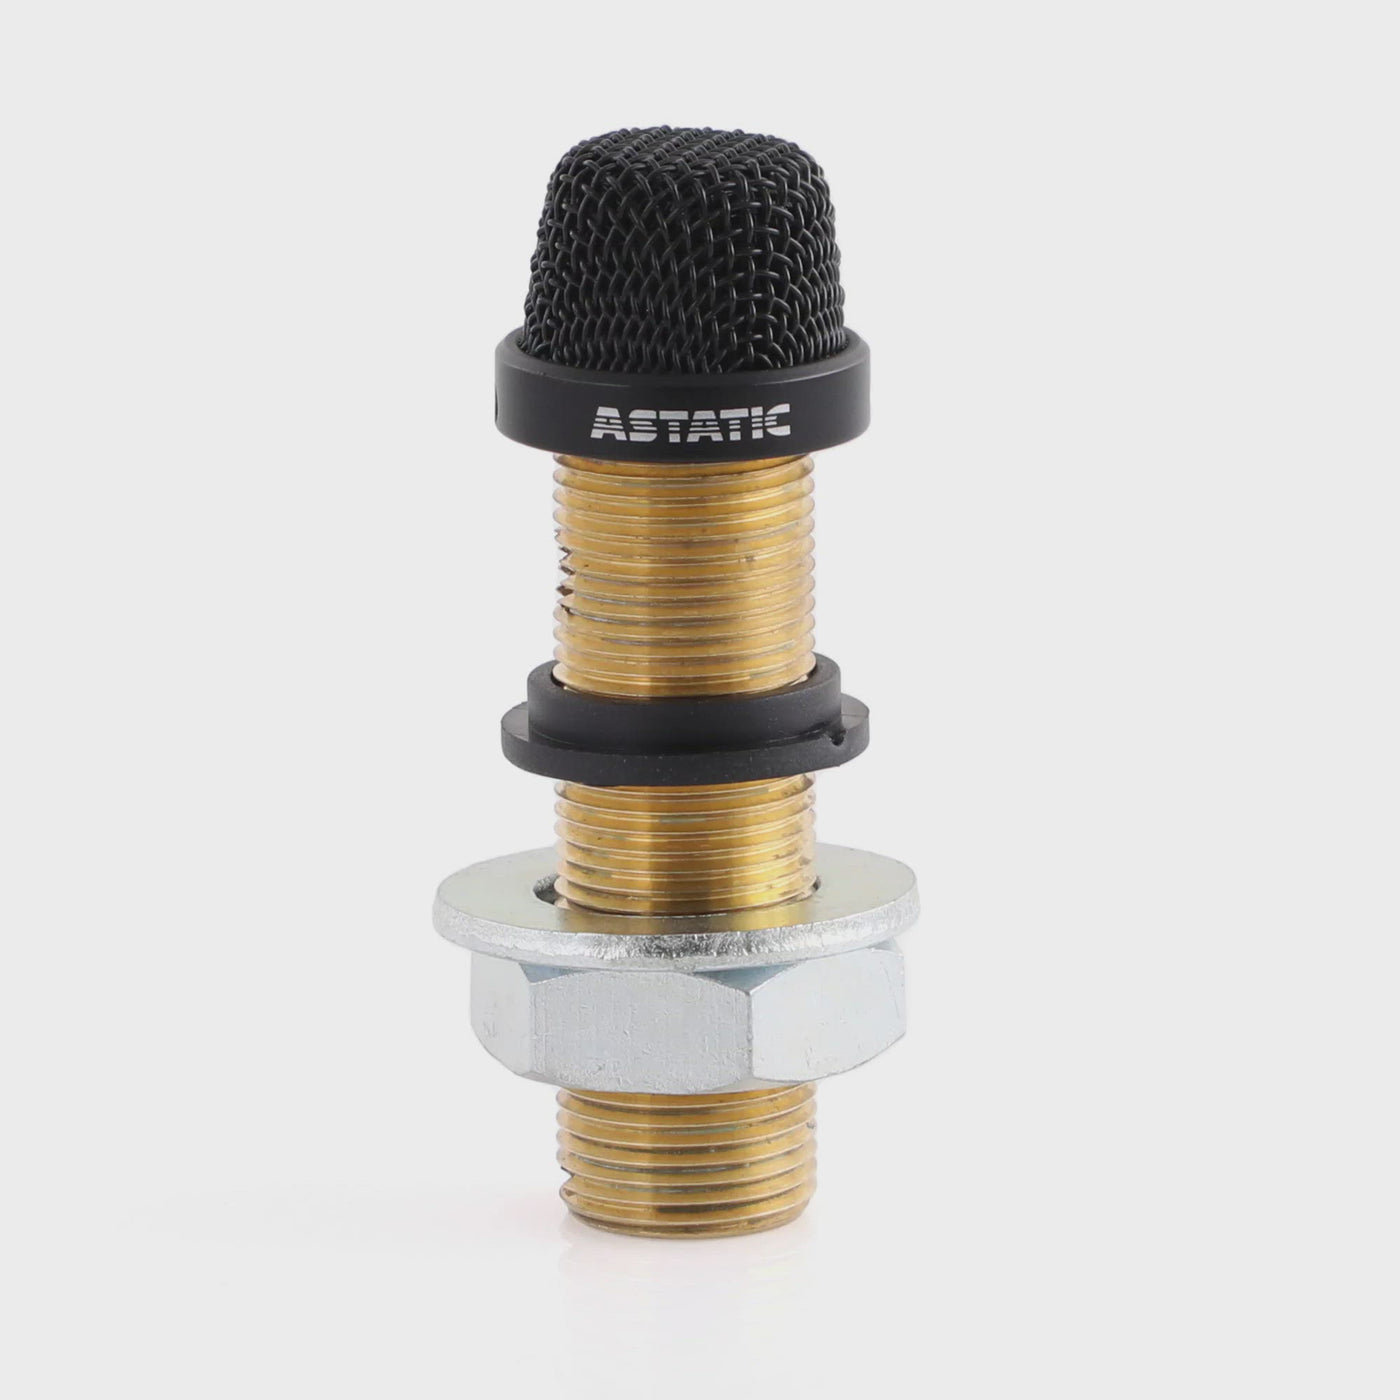 Astatic 220VP Button Microphone - Black